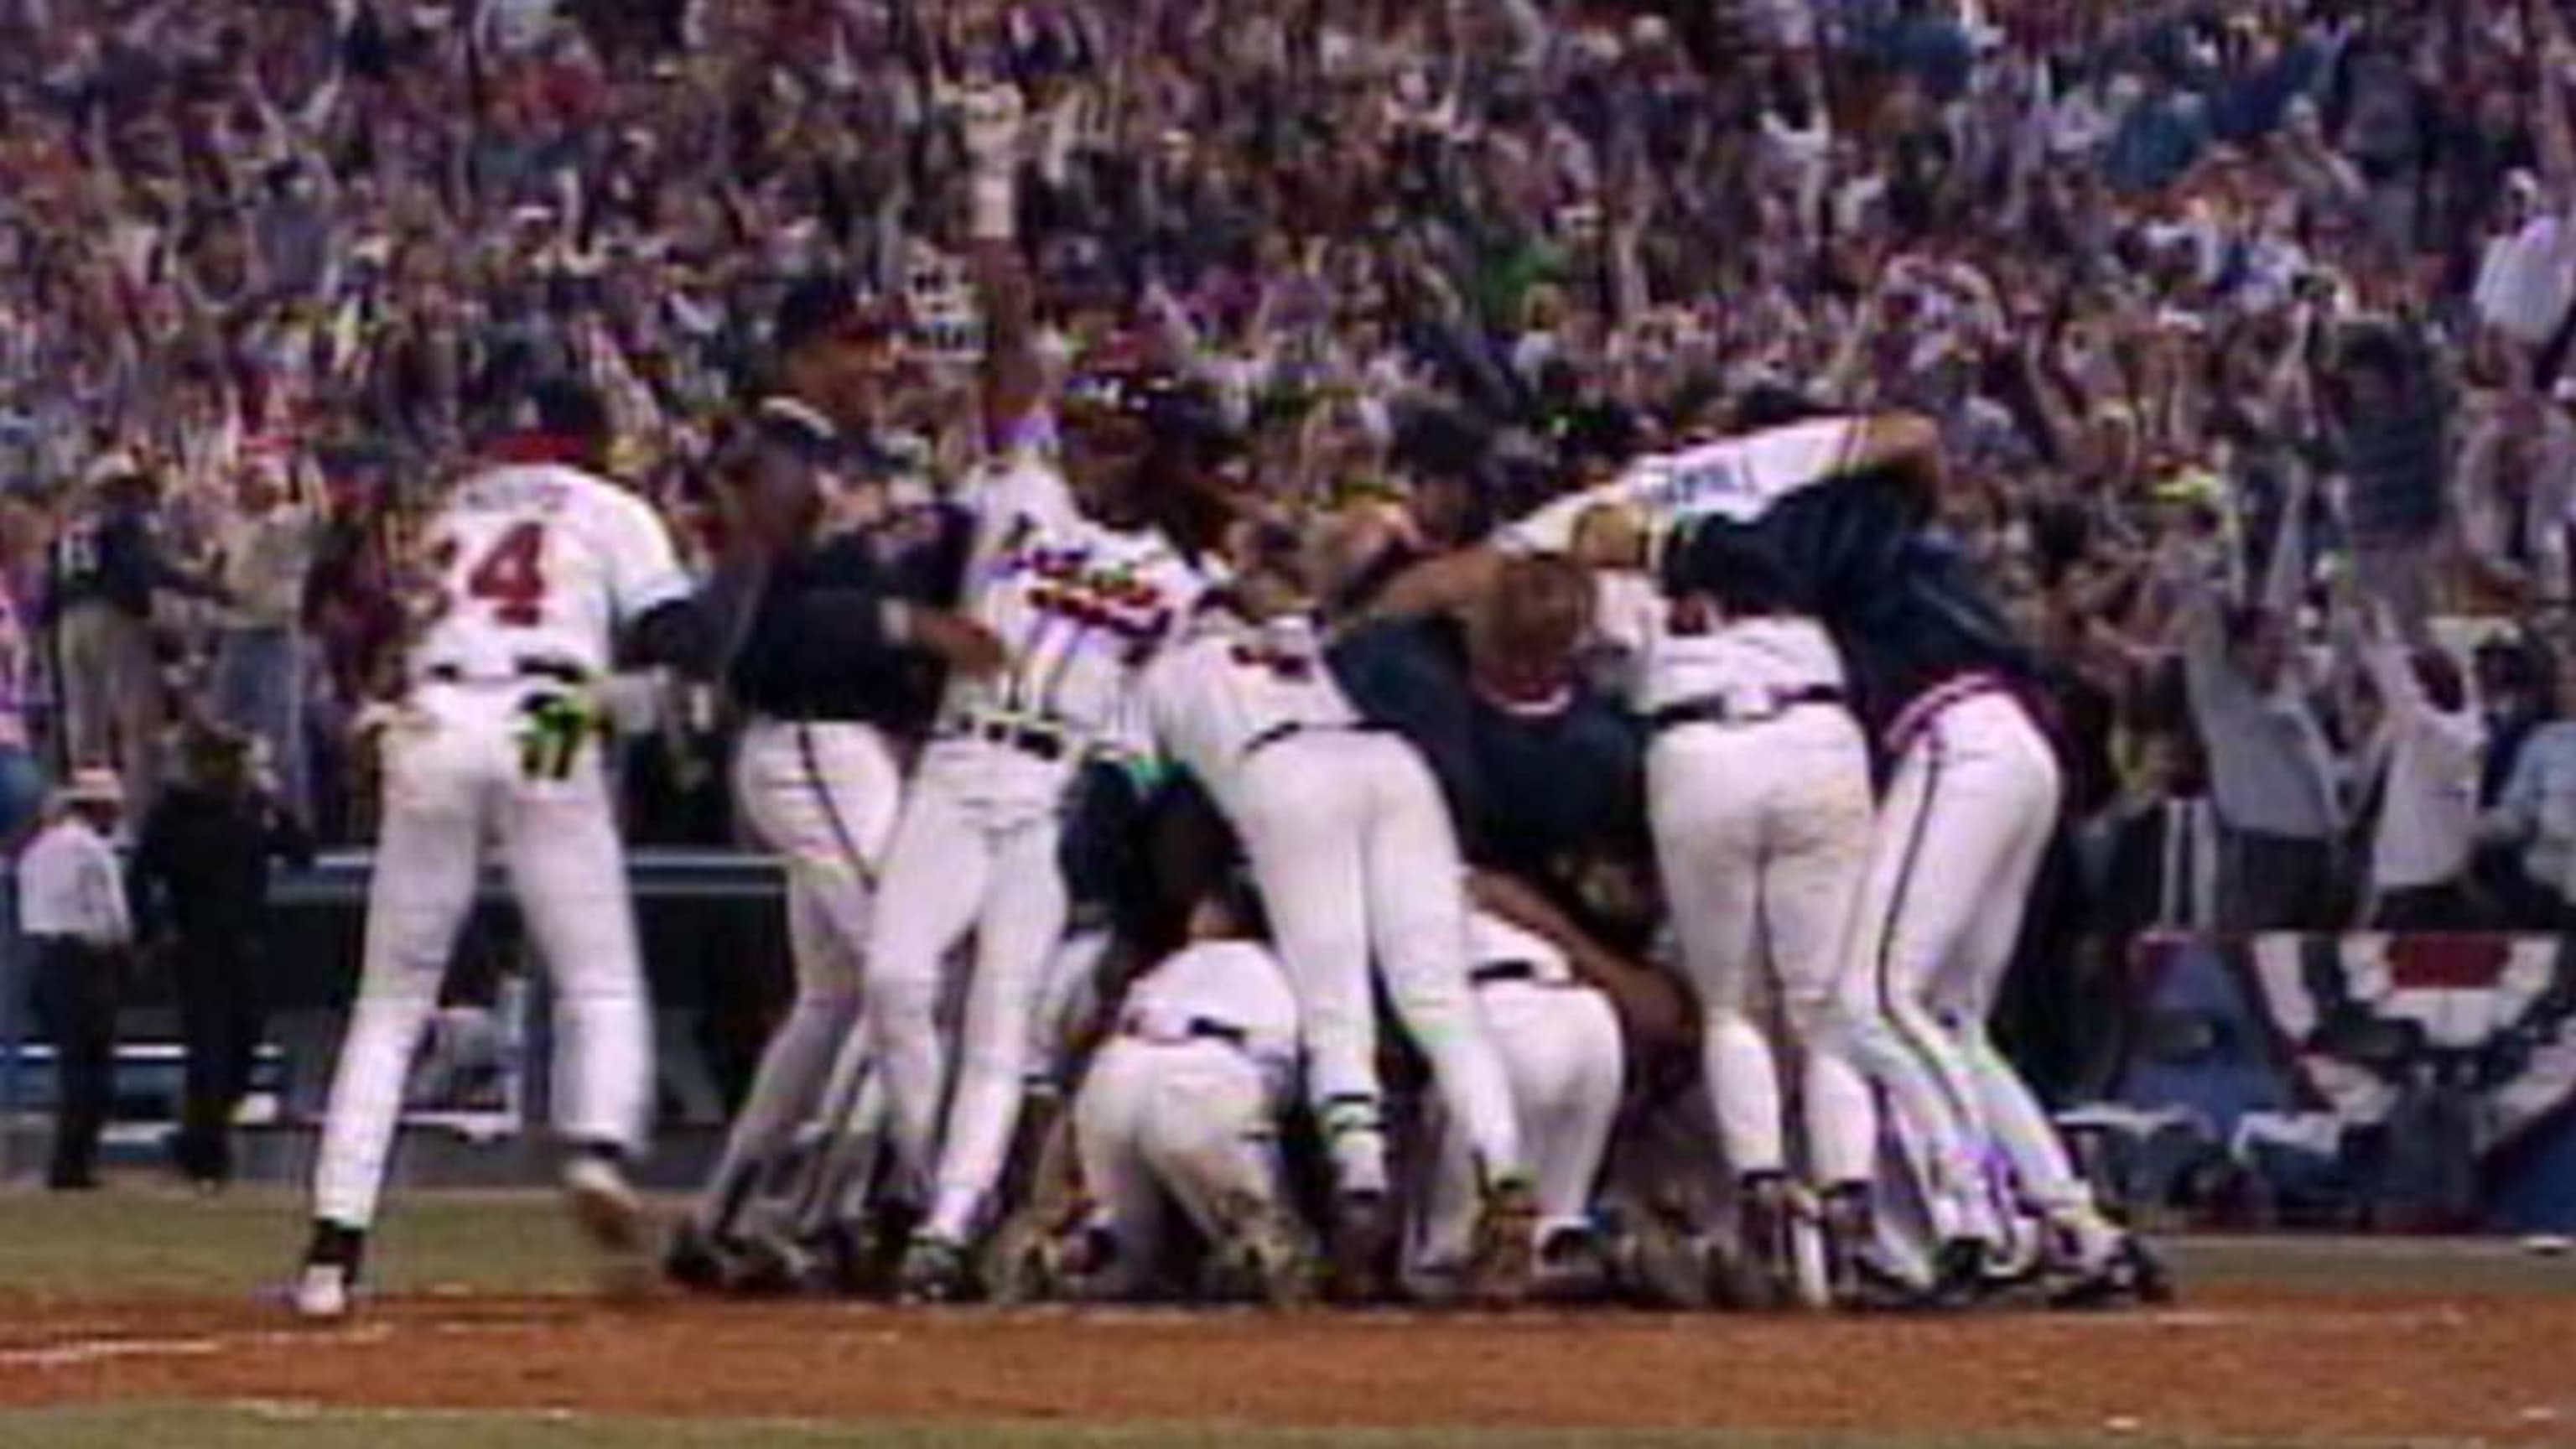  Baseball's Greatest Games: 1992 NLCS Game 7 [DVD